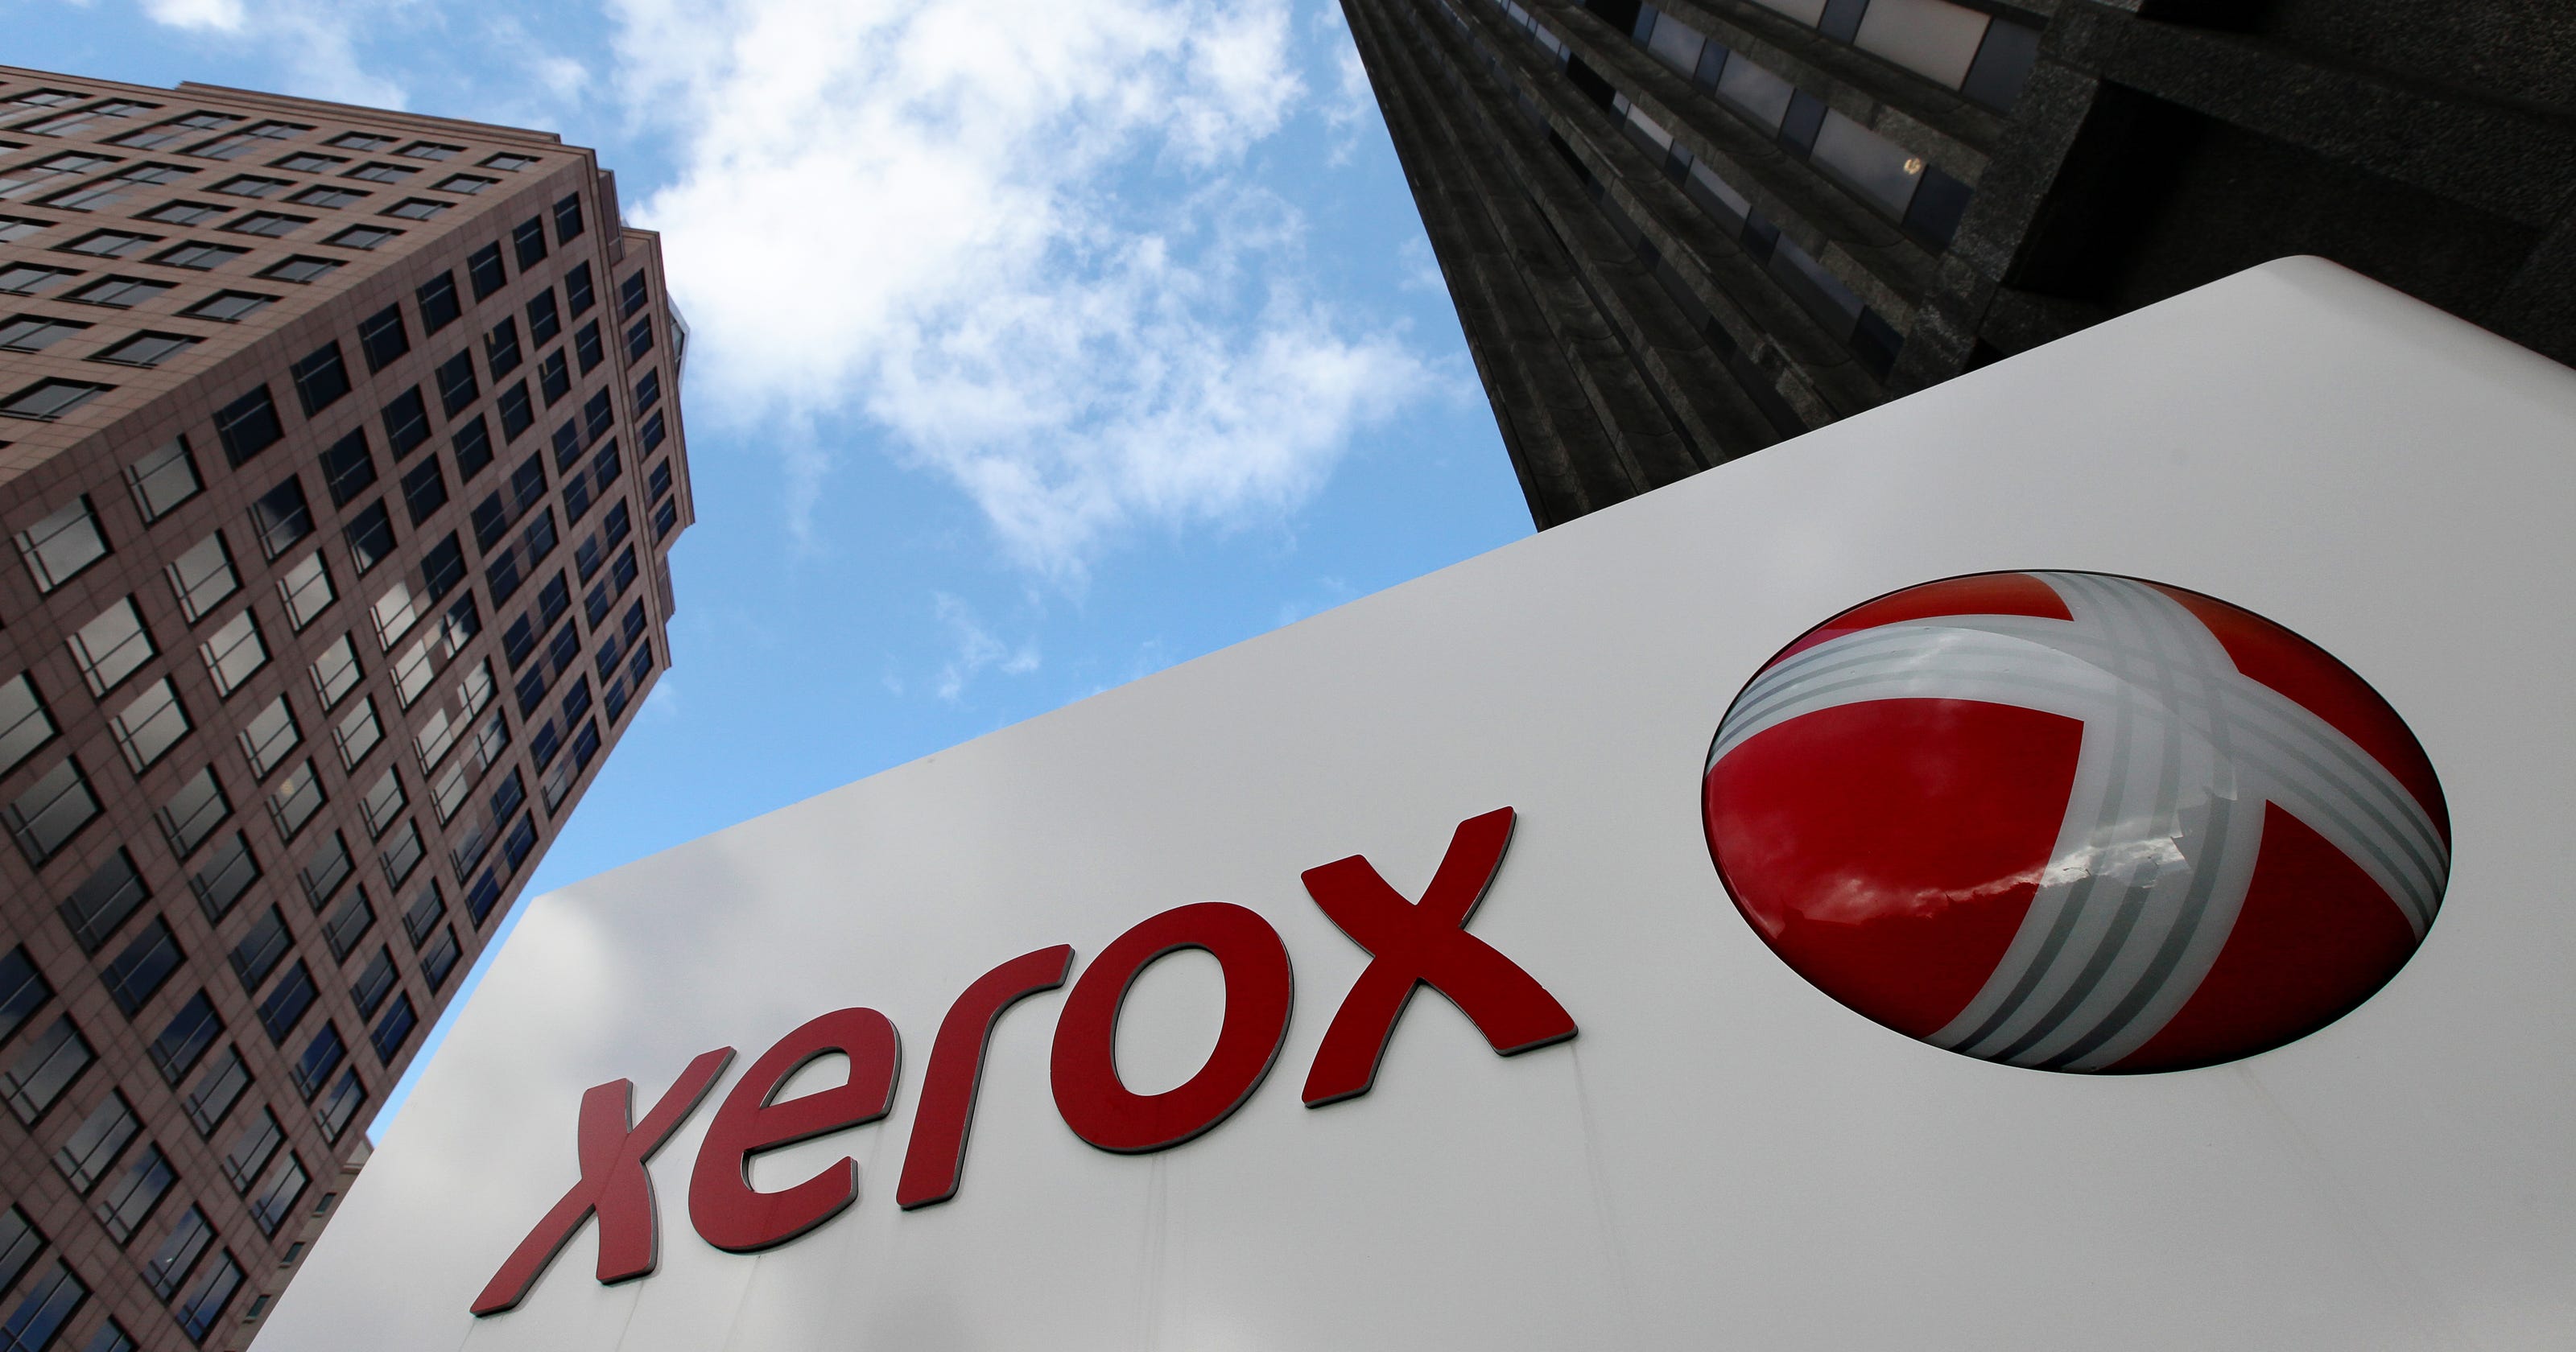 xerox-meets-with-investors-in-new-york